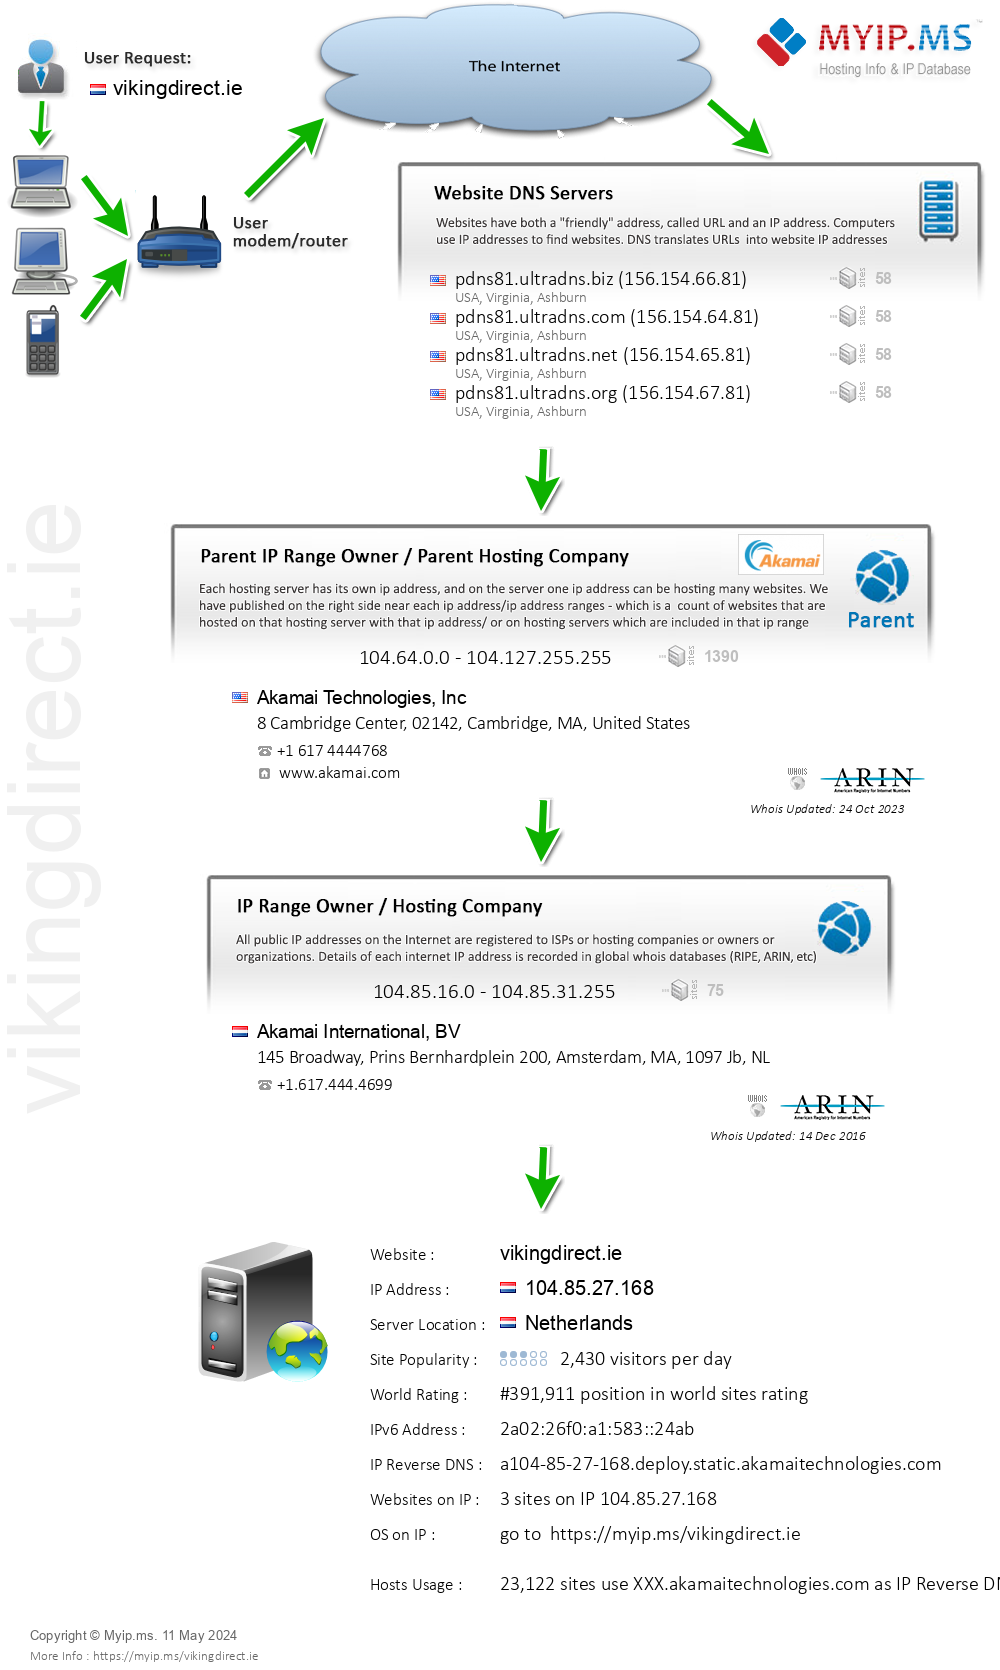 Vikingdirect.ie - Website Hosting Visual IP Diagram